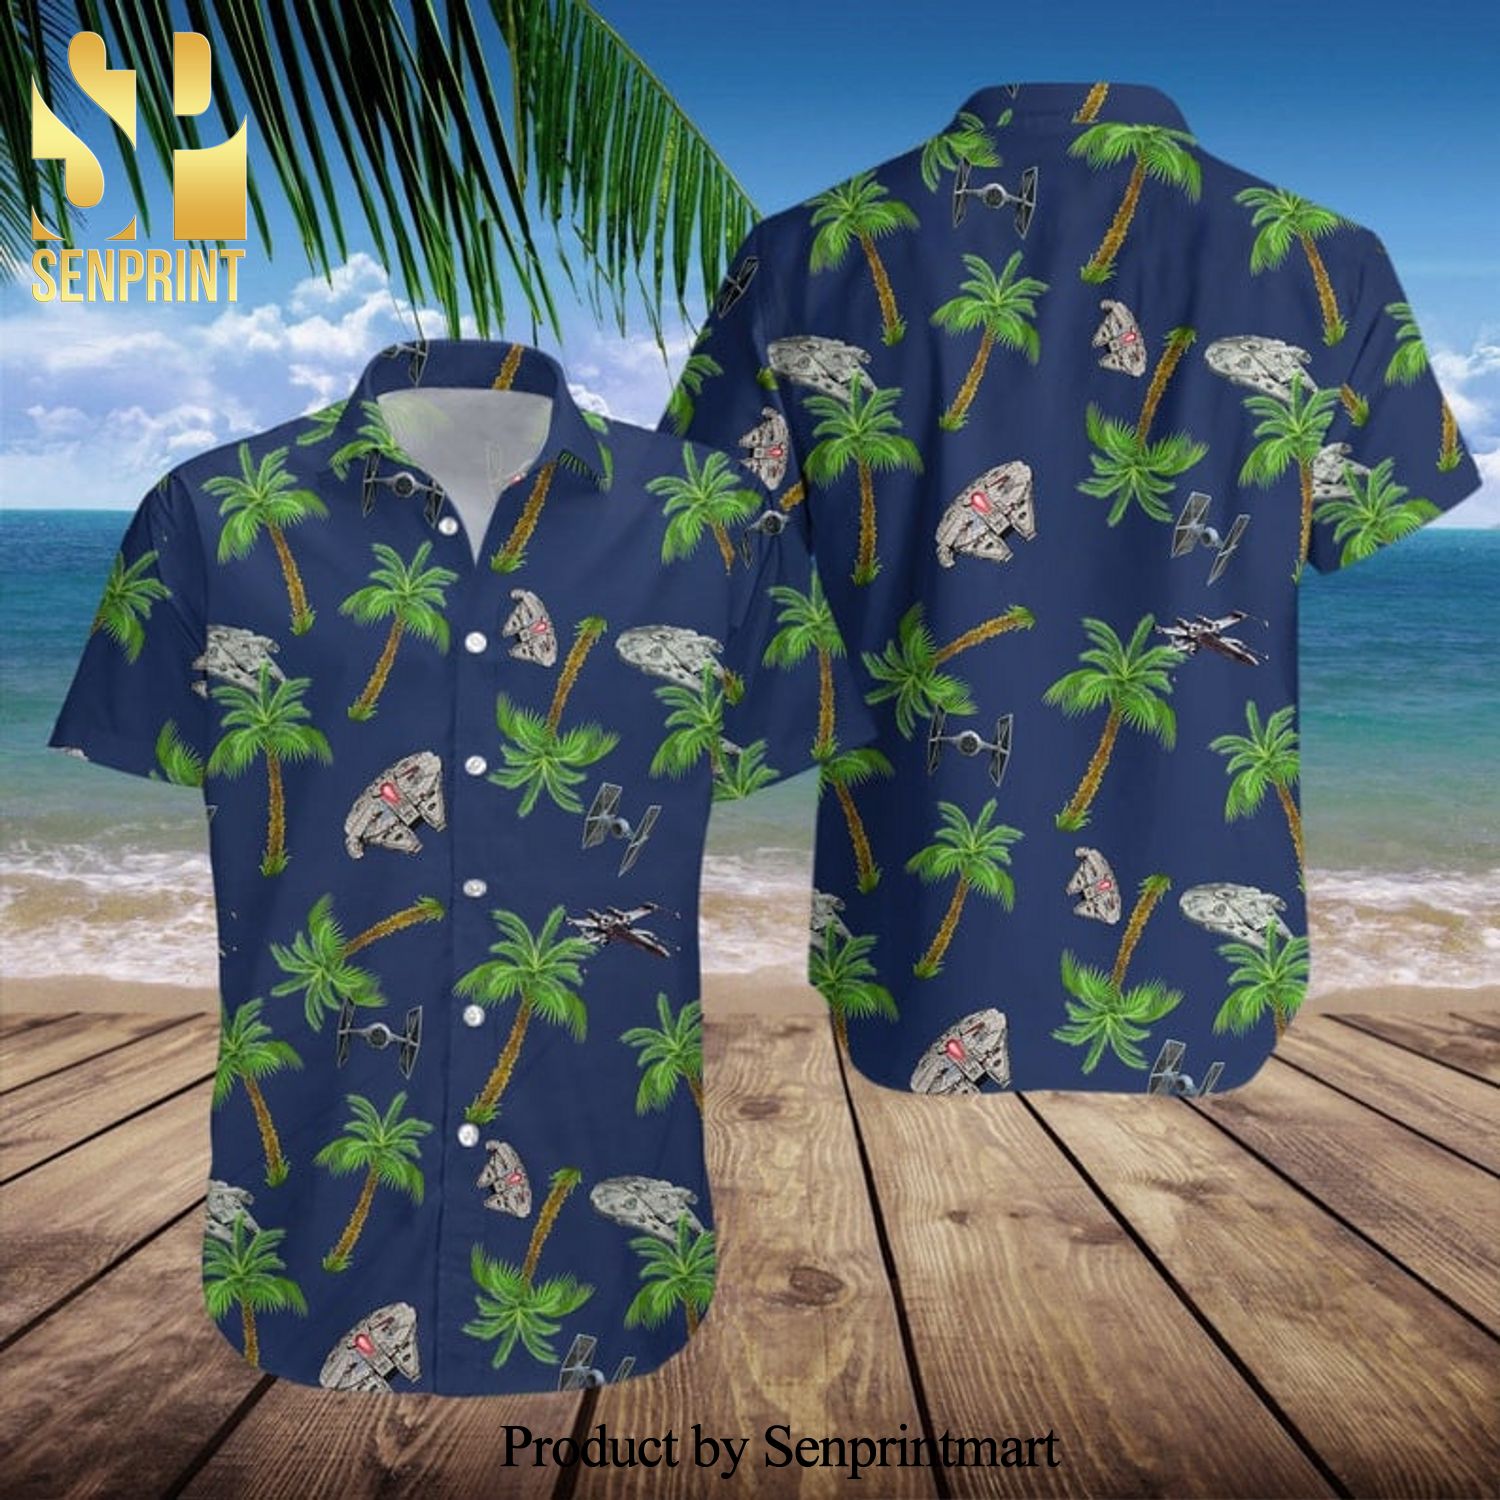 Millennium Falcon Star Wars Palm Tree Full Printing Hawaiian Shirt - Navy